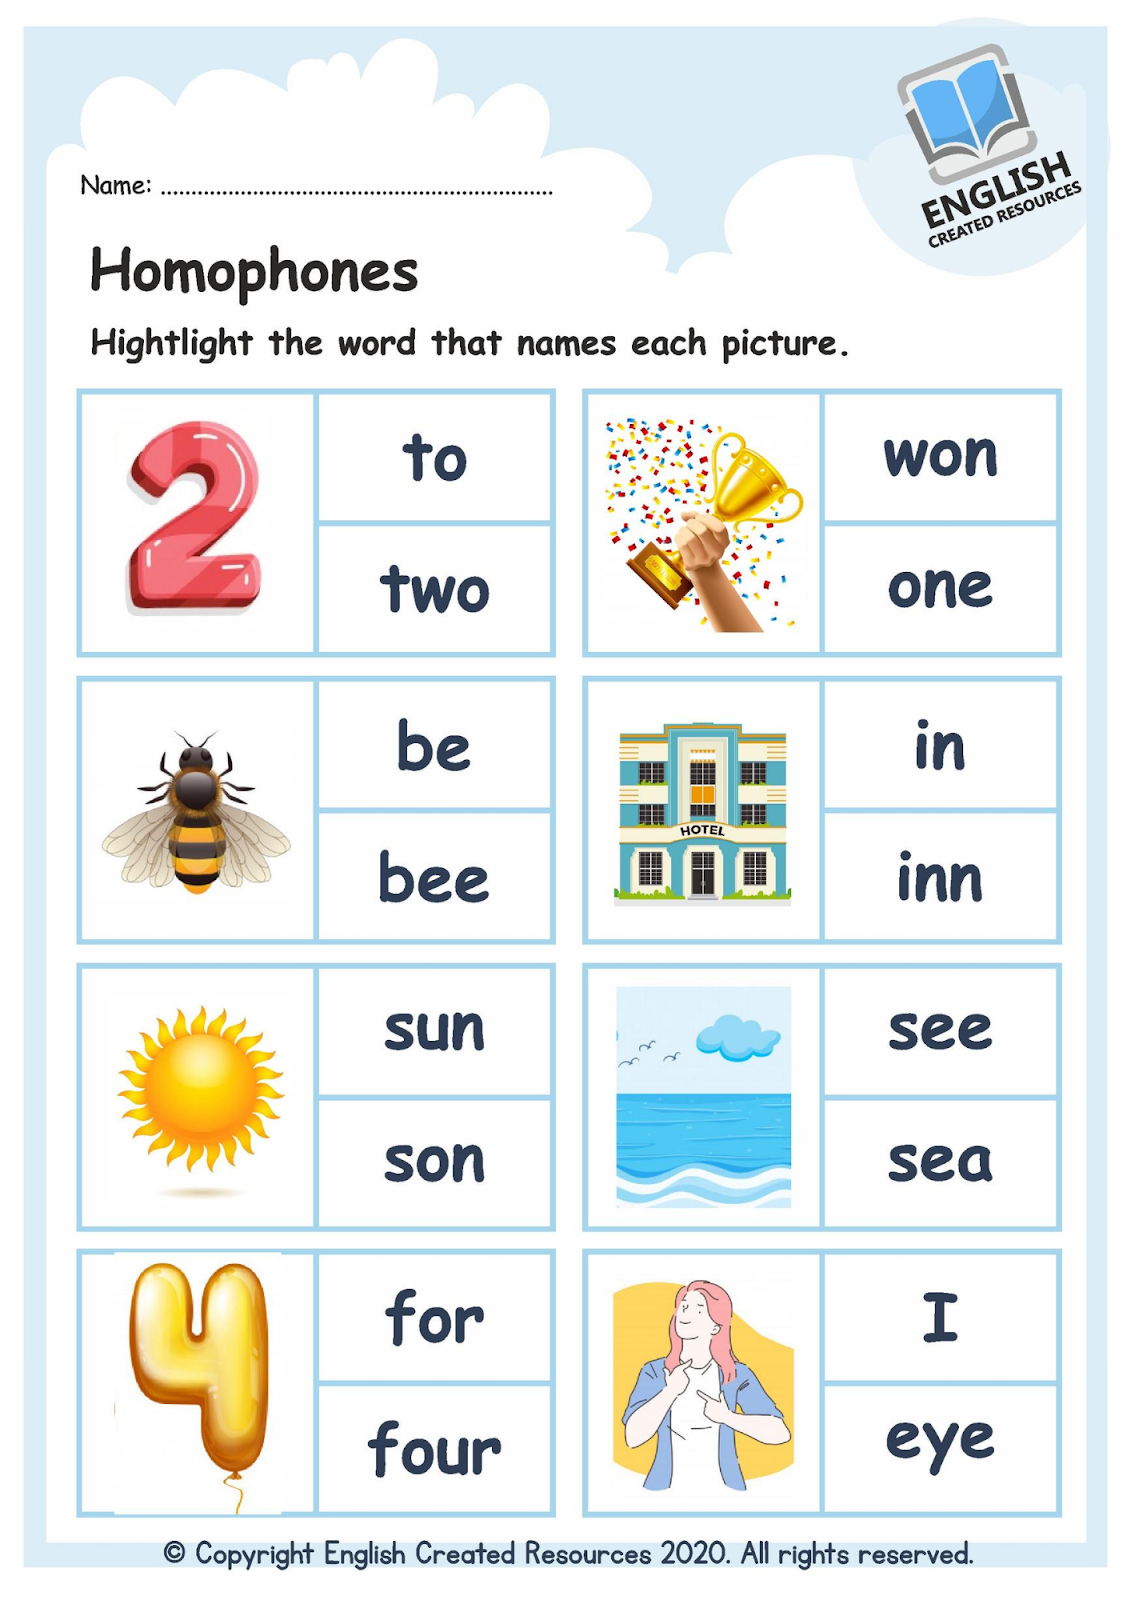 homophones-worksheets